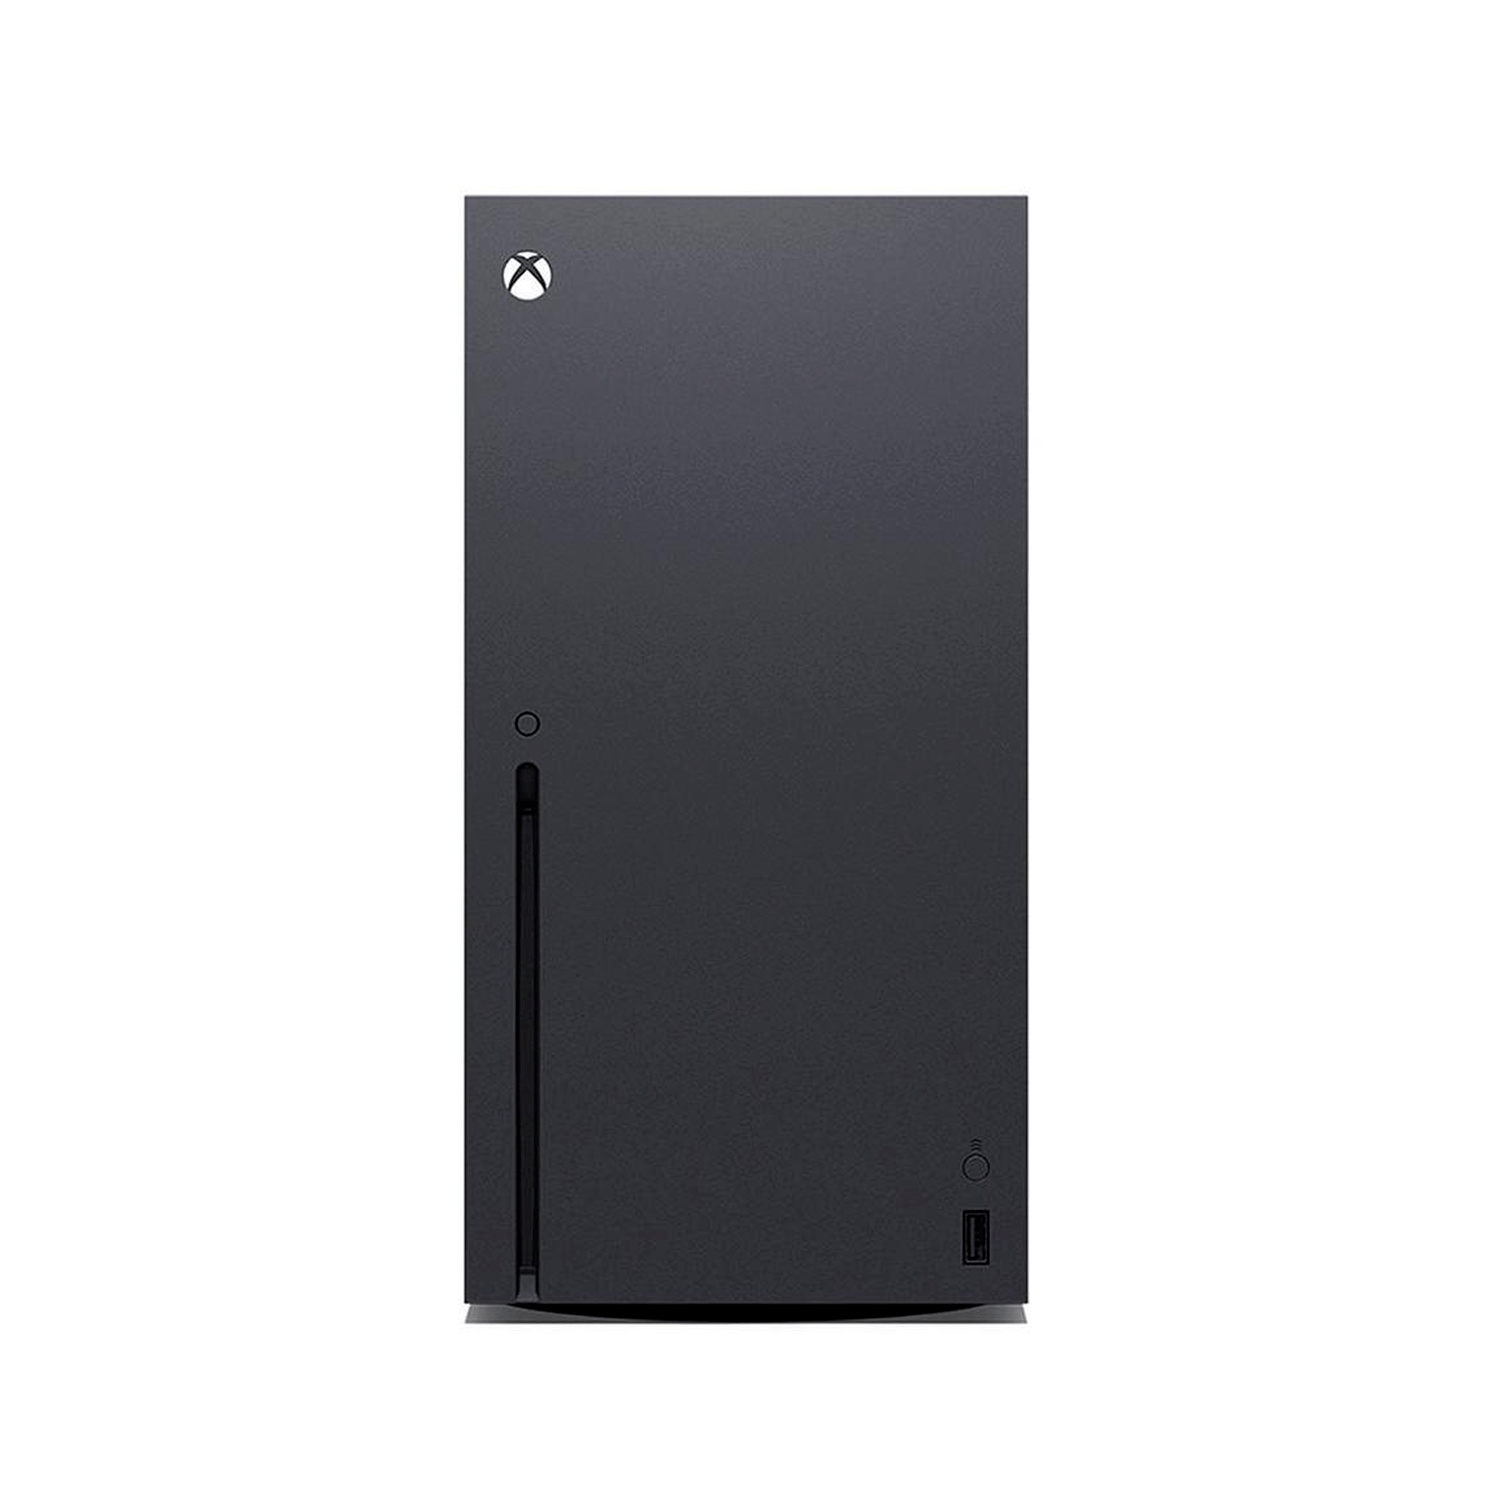 Console Microsoft Xbox One Series X Forza Horizon 5 Bundle 1TB SSD - Preto